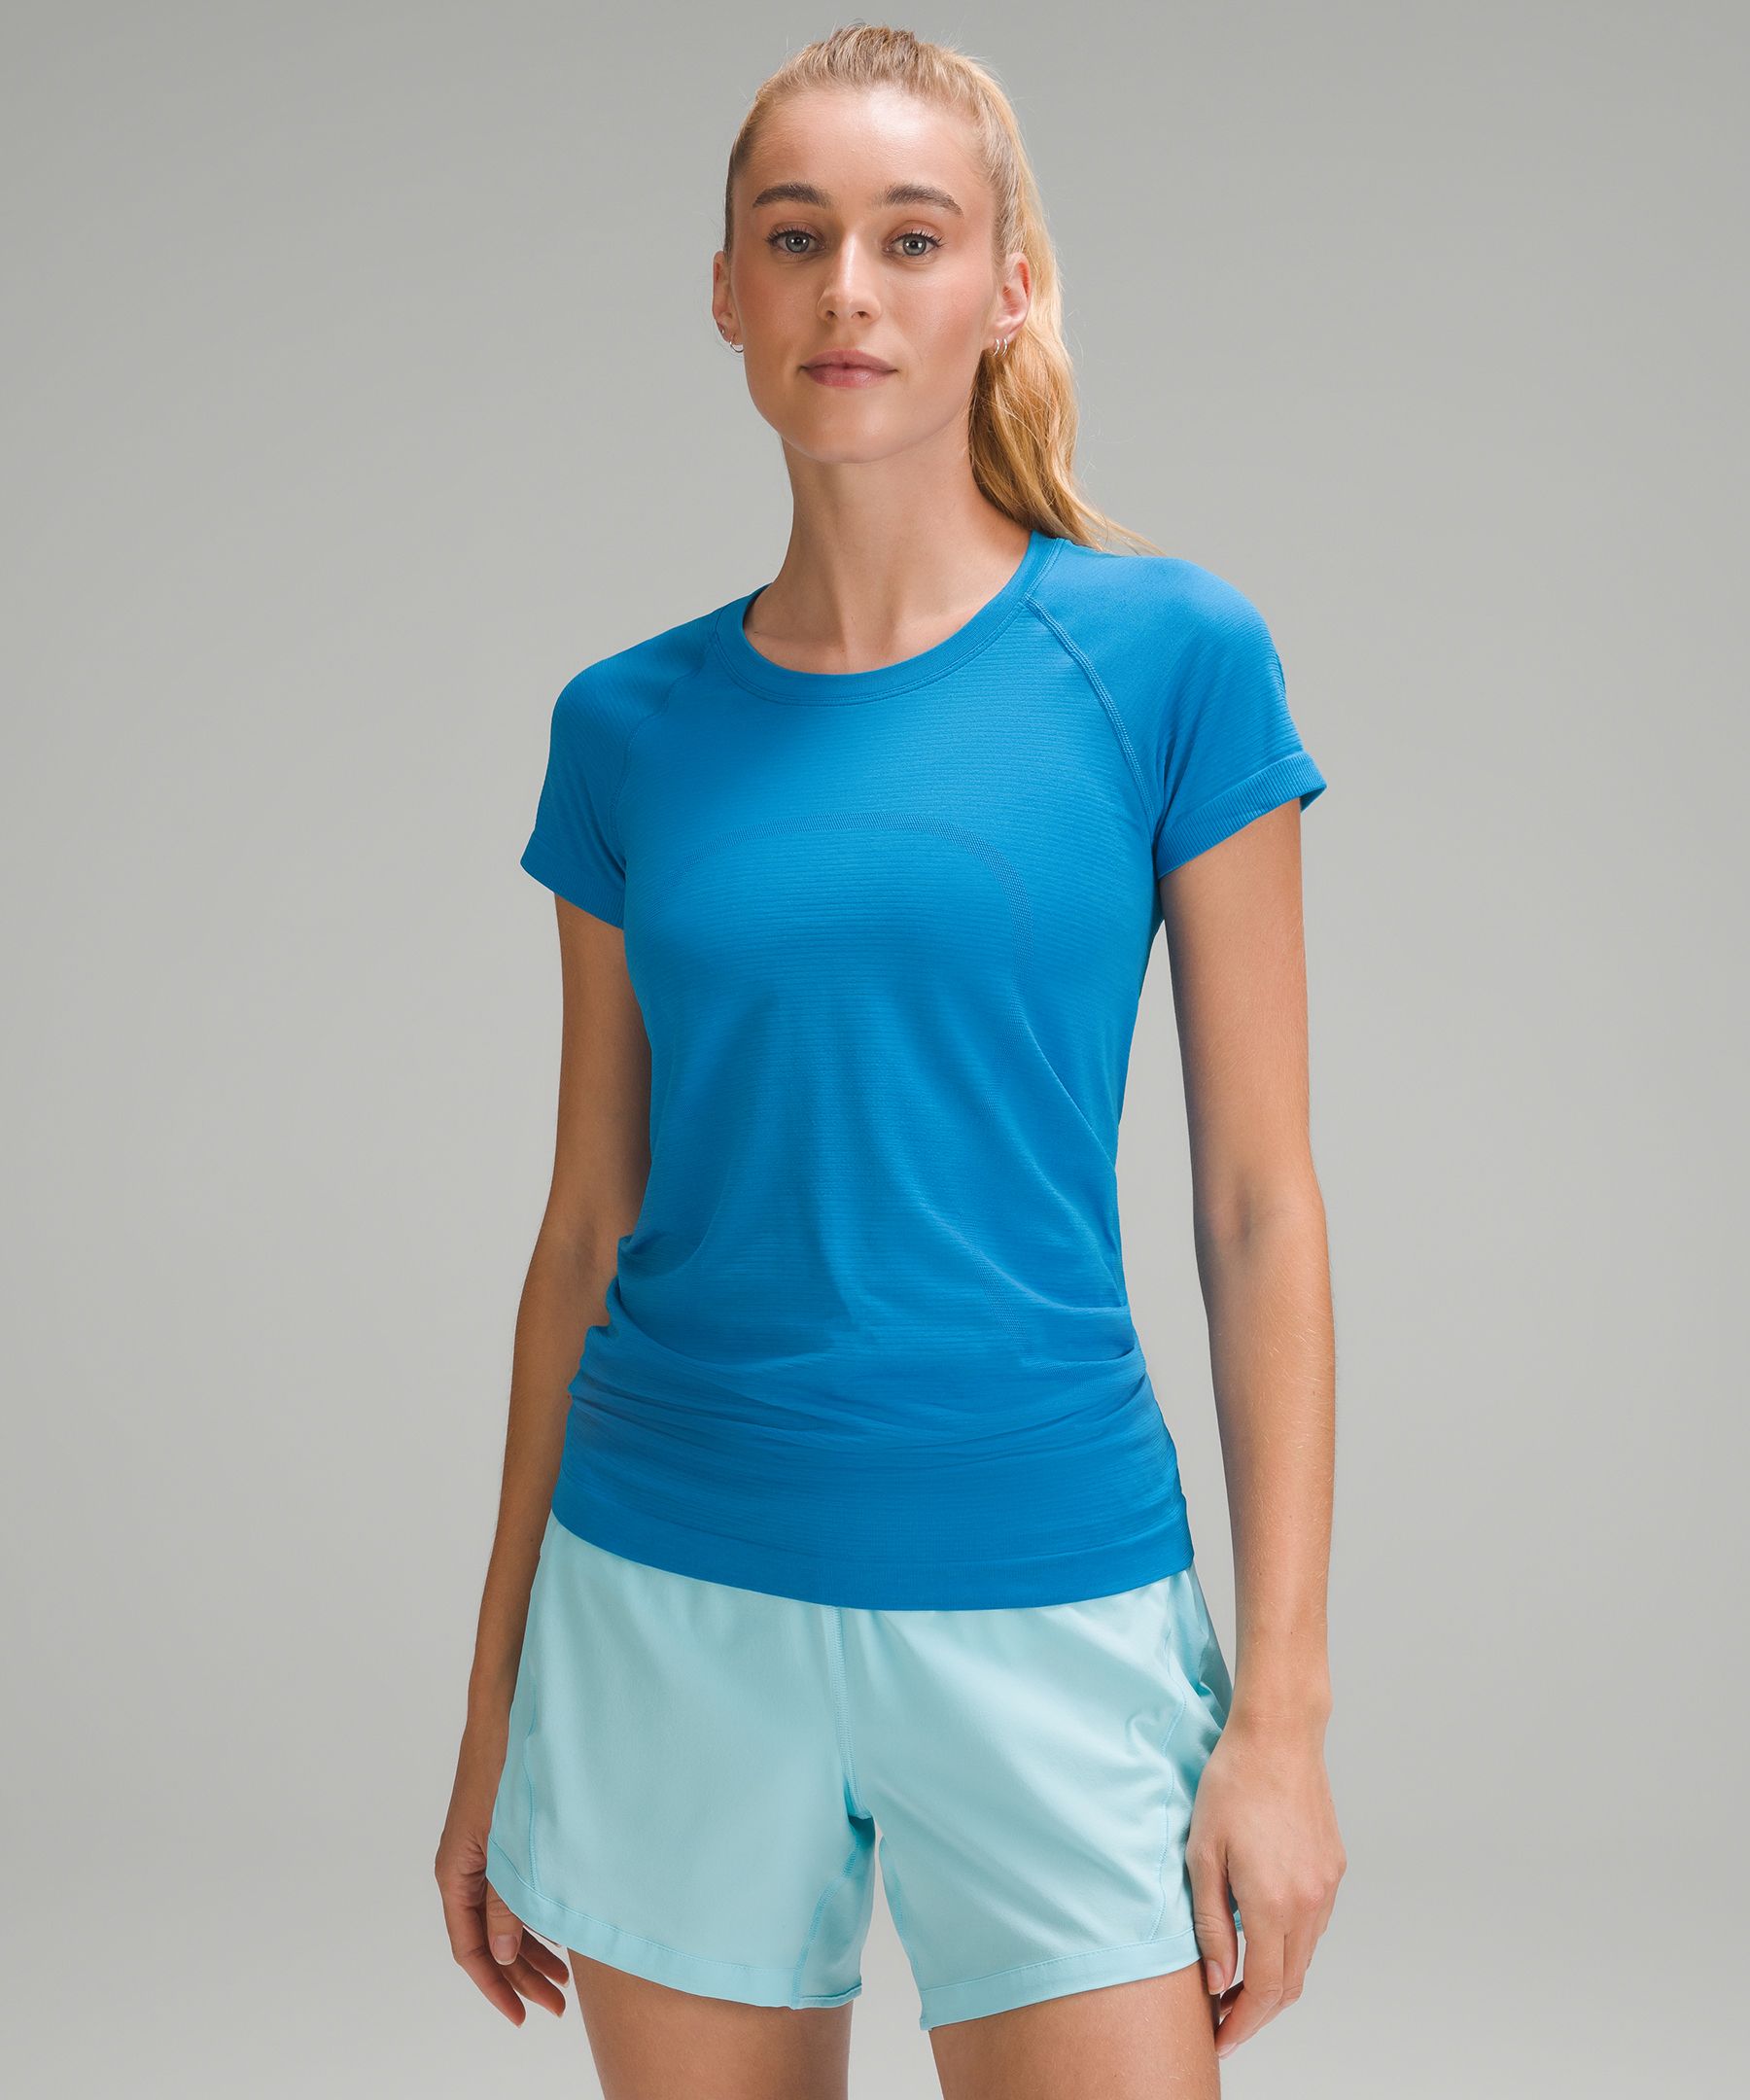 Lululemon Swiftly Tech Short Sleeve Shirt 2.0 - Symphony Blue